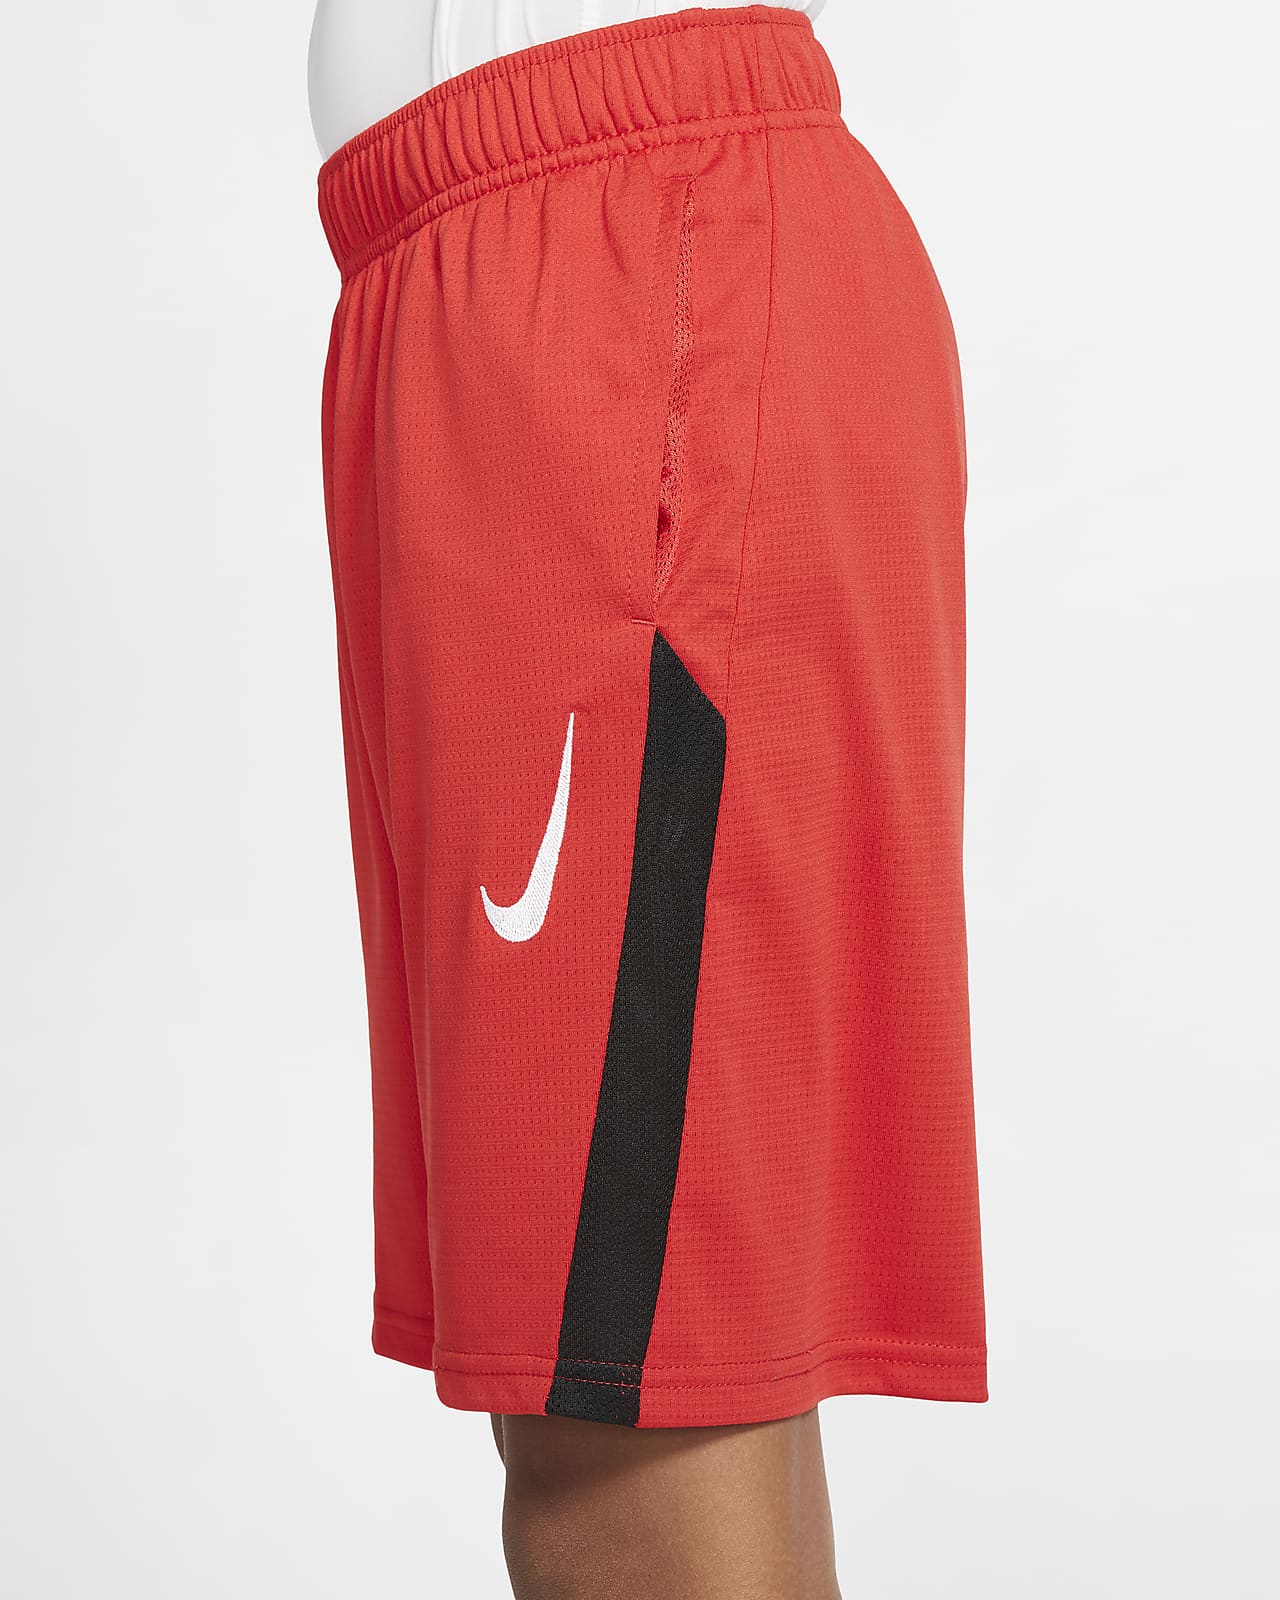 Nike Big Kids' (Boys') Training Shorts 